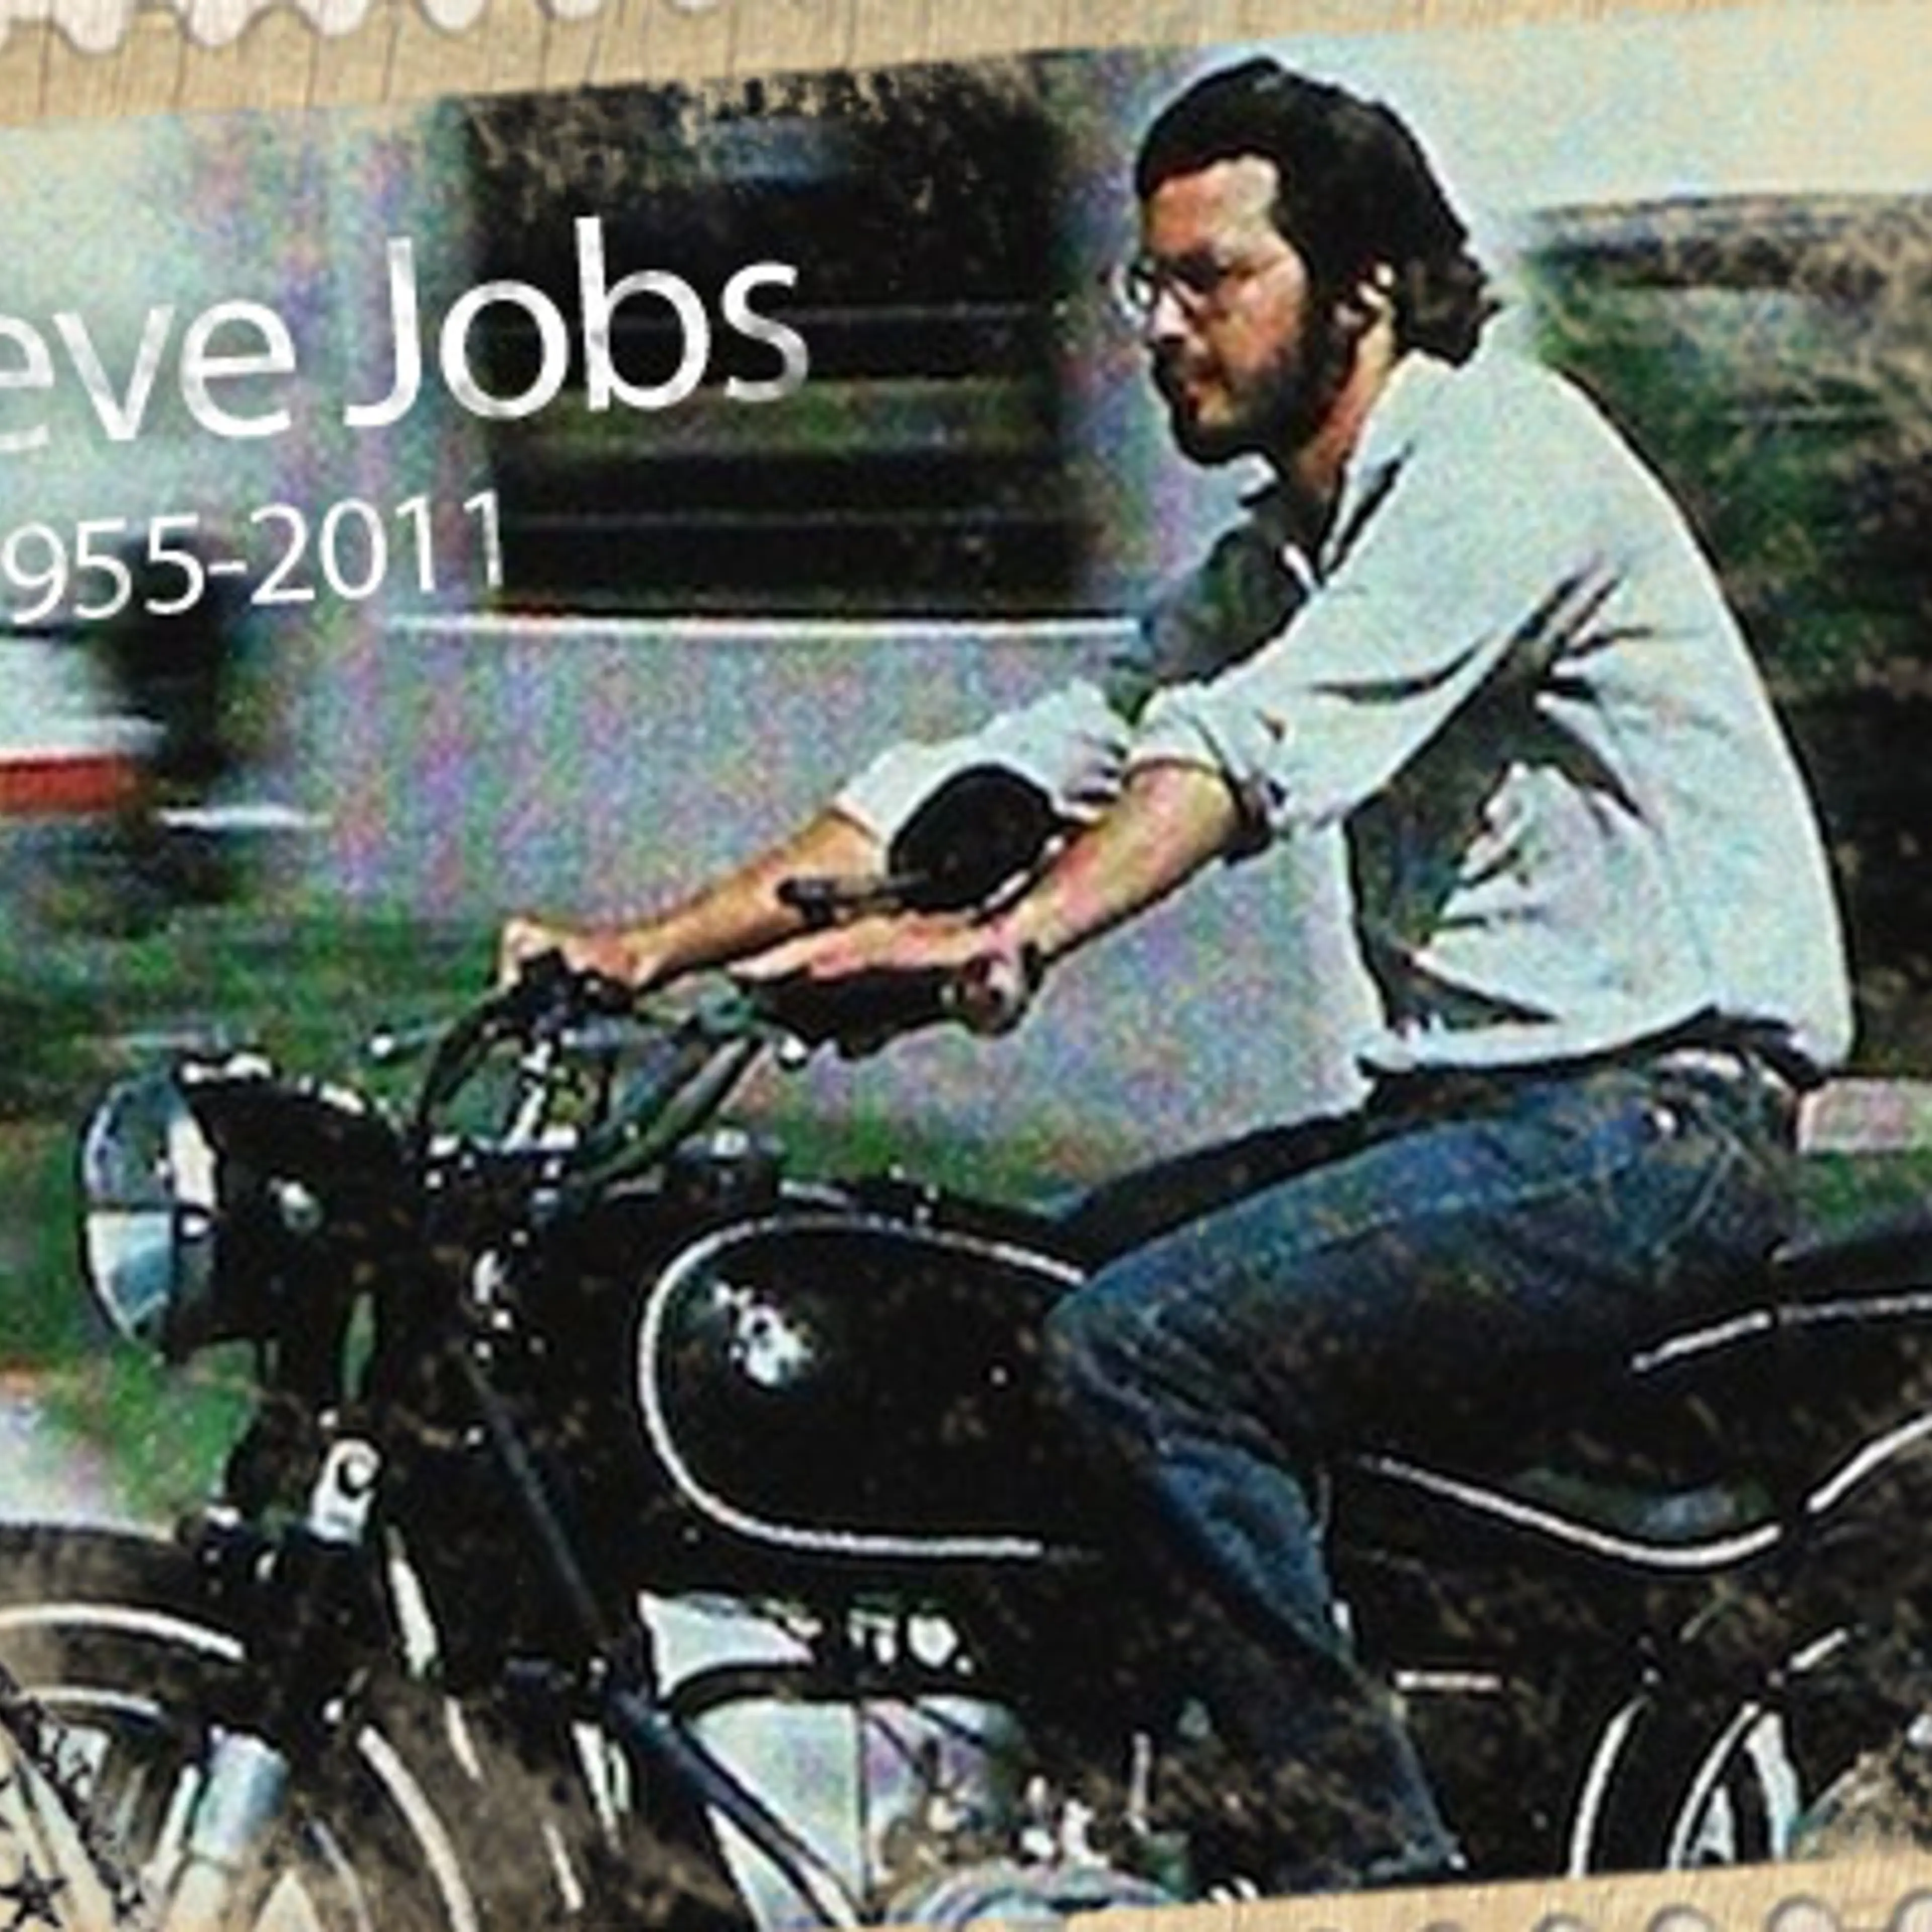 "Happy Birthday Steve" - Flashing through the life of Steve Jobs